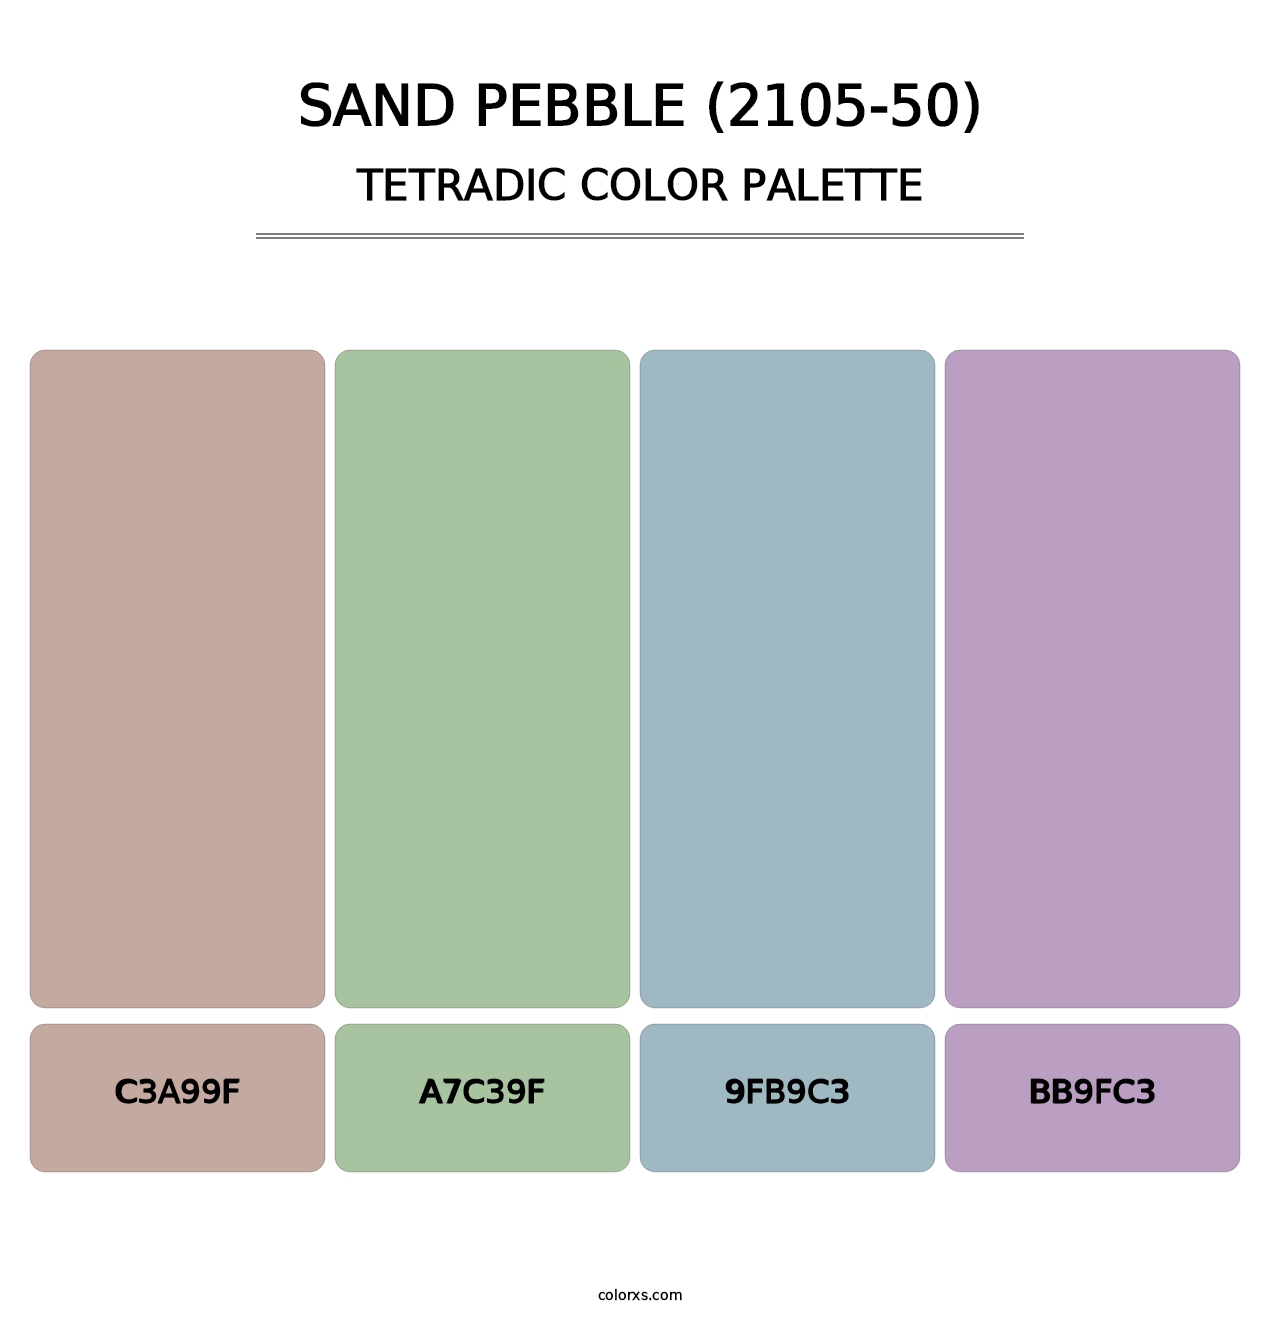 Sand Pebble (2105-50) - Tetradic Color Palette